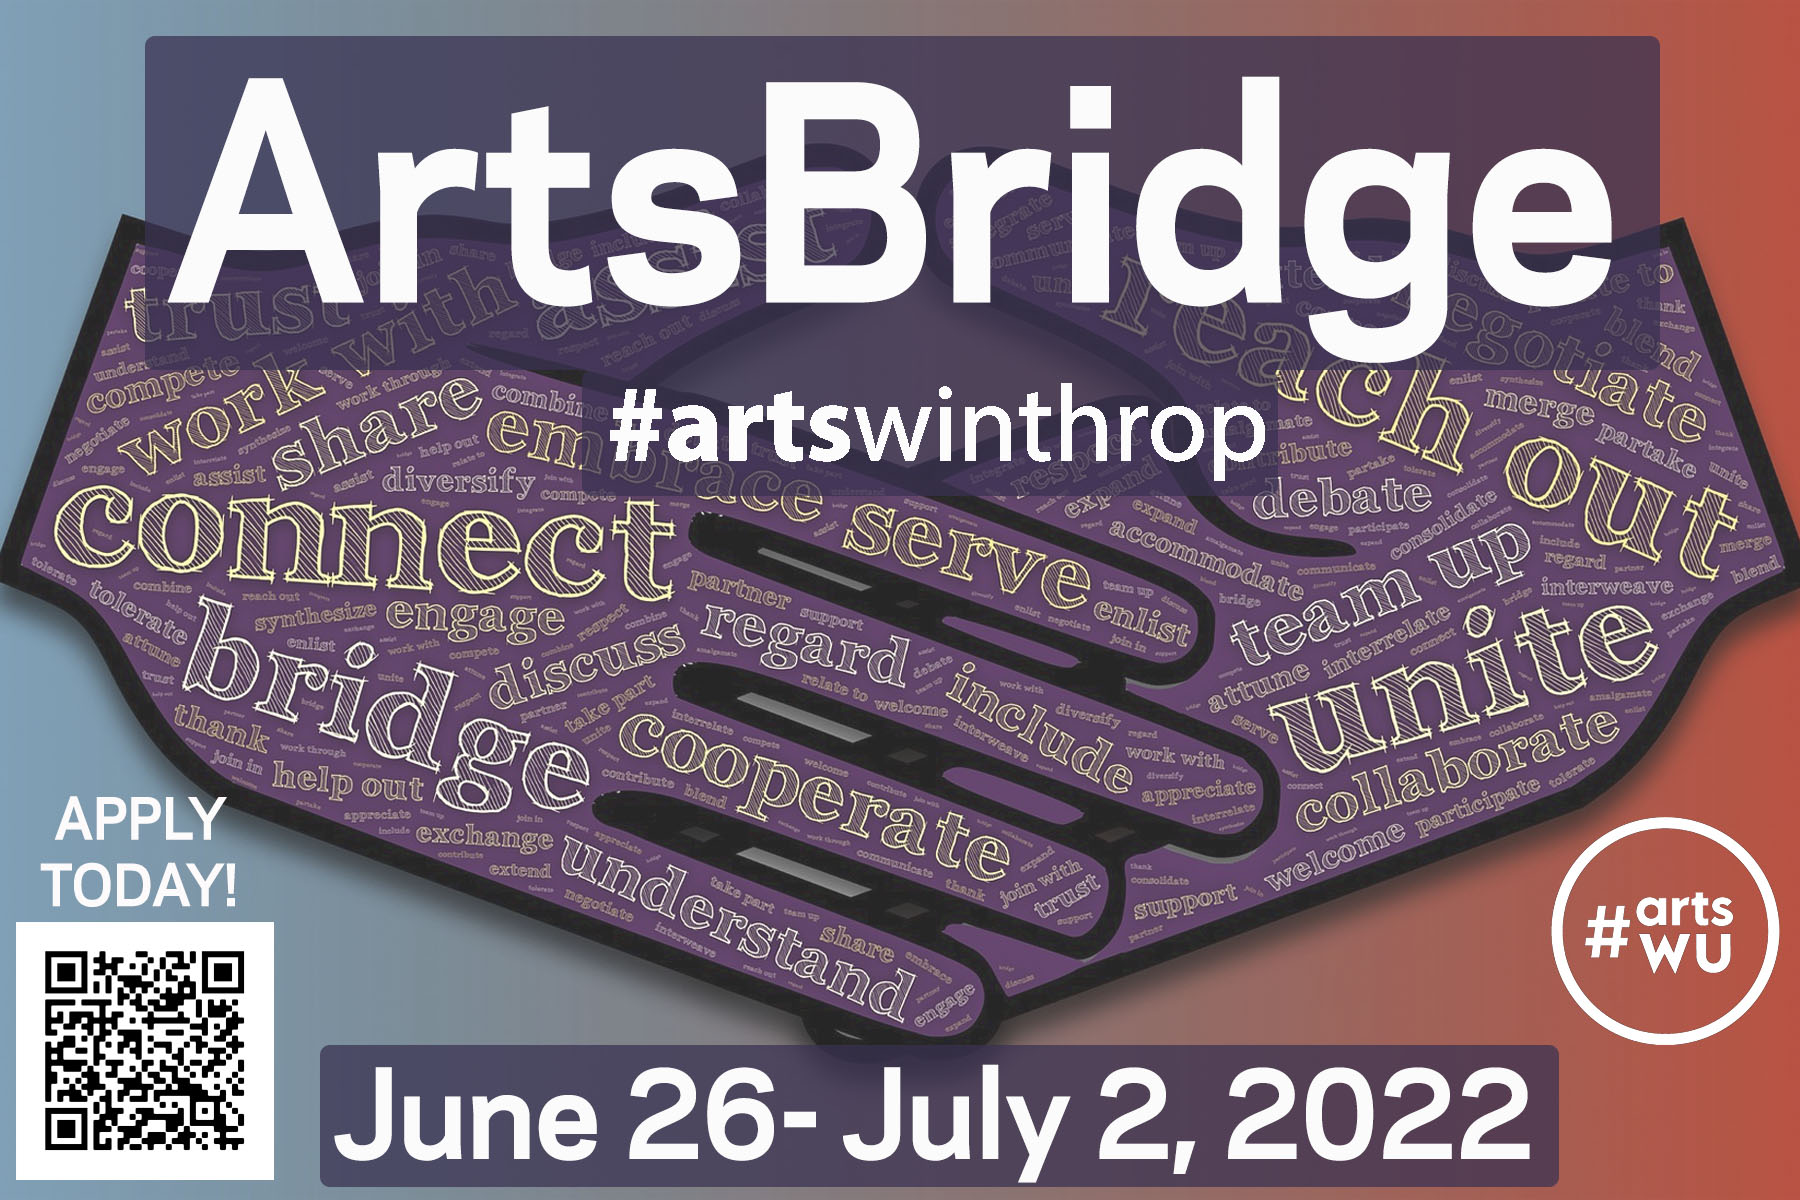 Advertisement for Arts Bridge at Winthrop University.